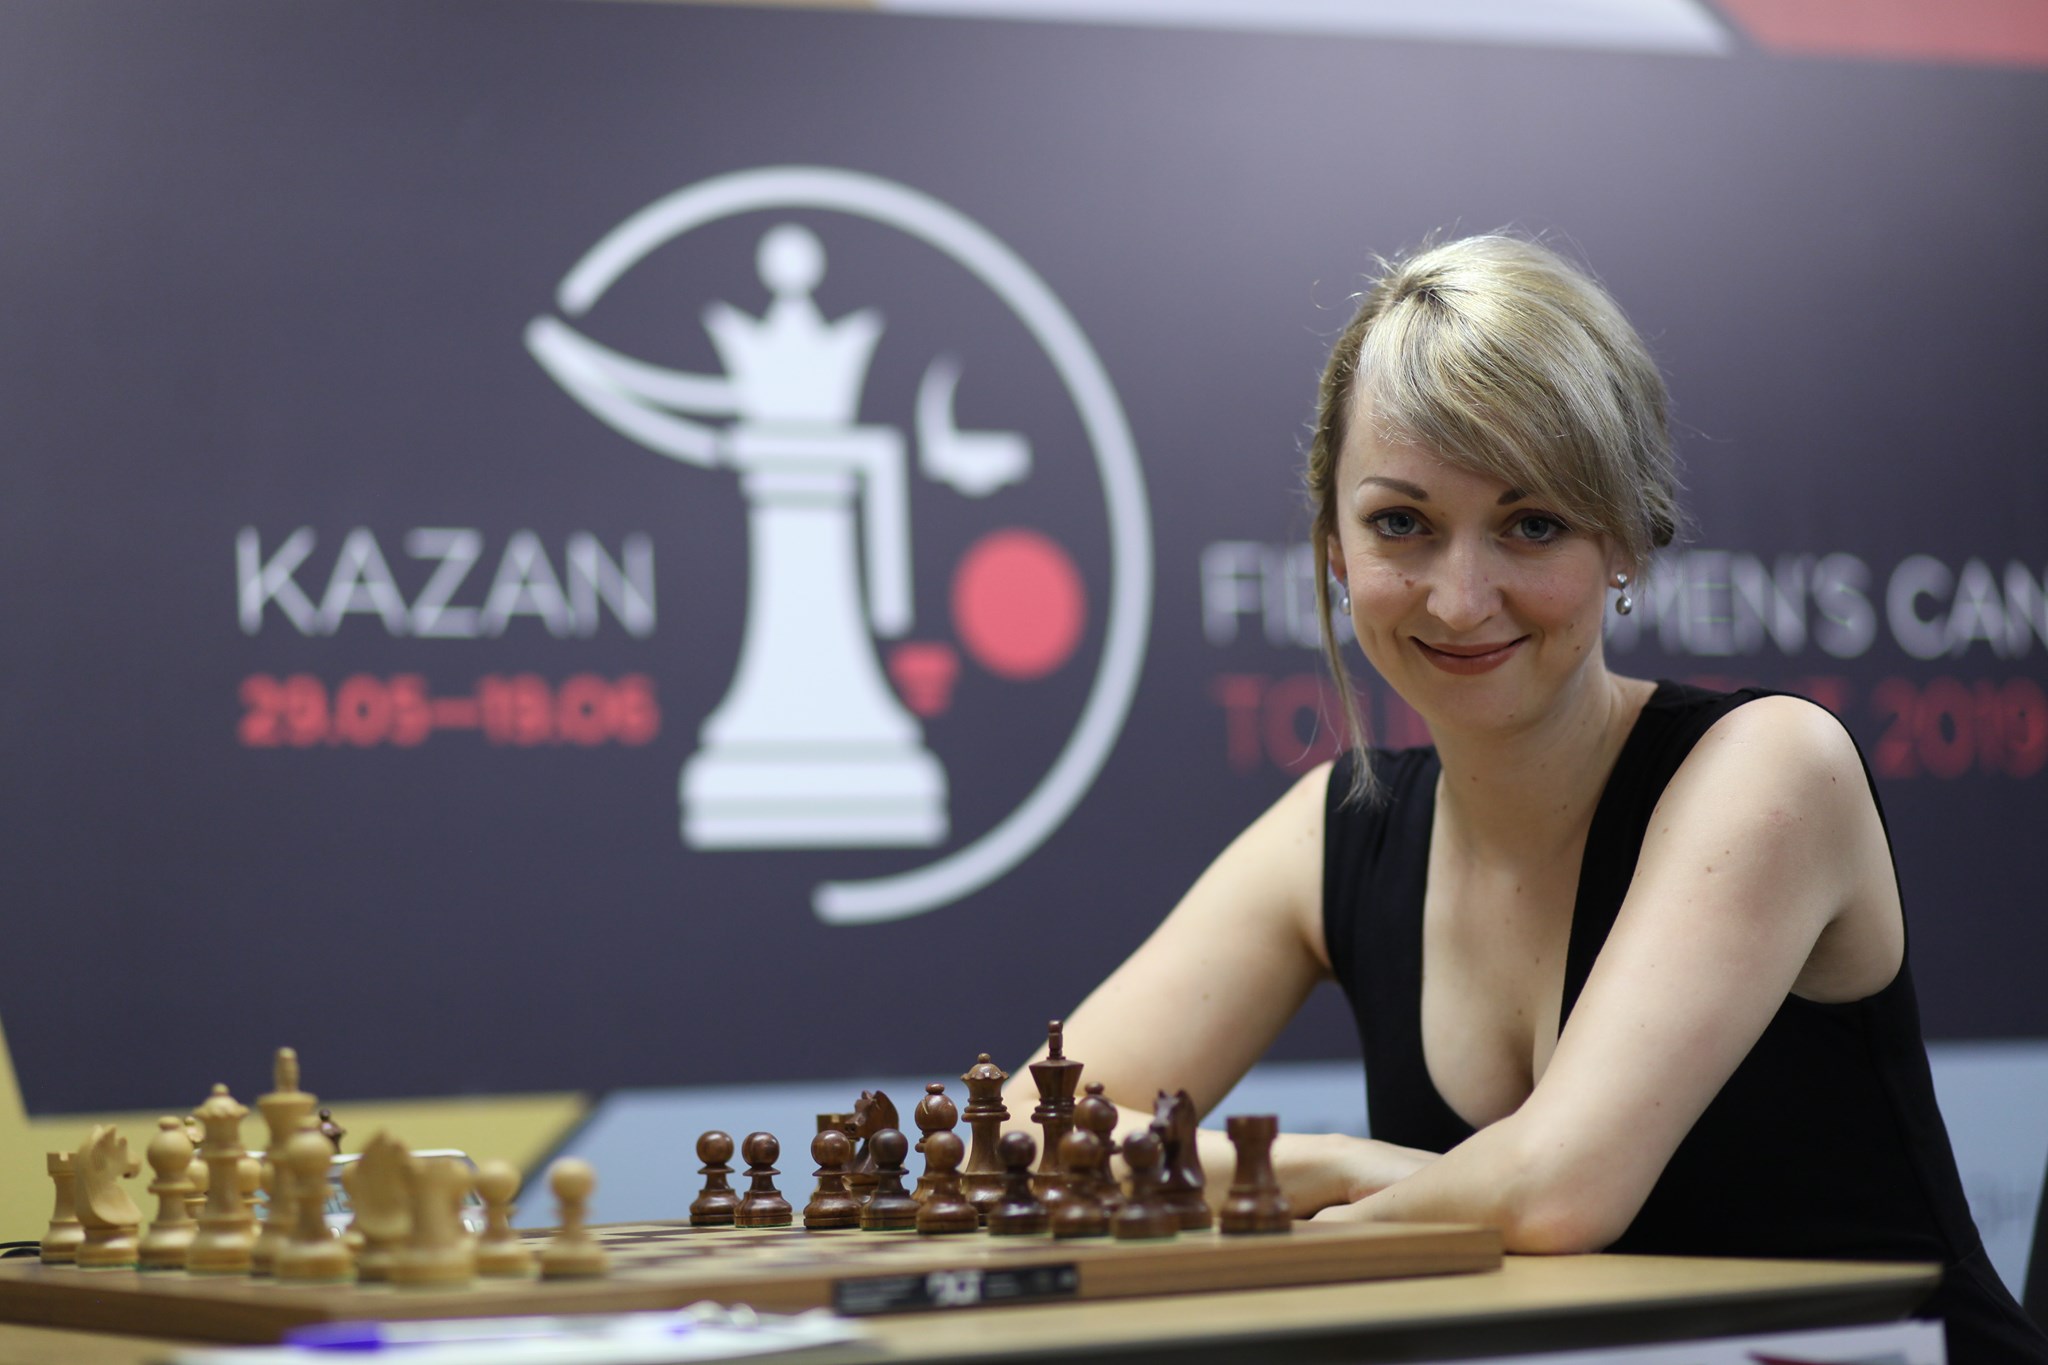 I'm The 2020 Women's Chess World Champion